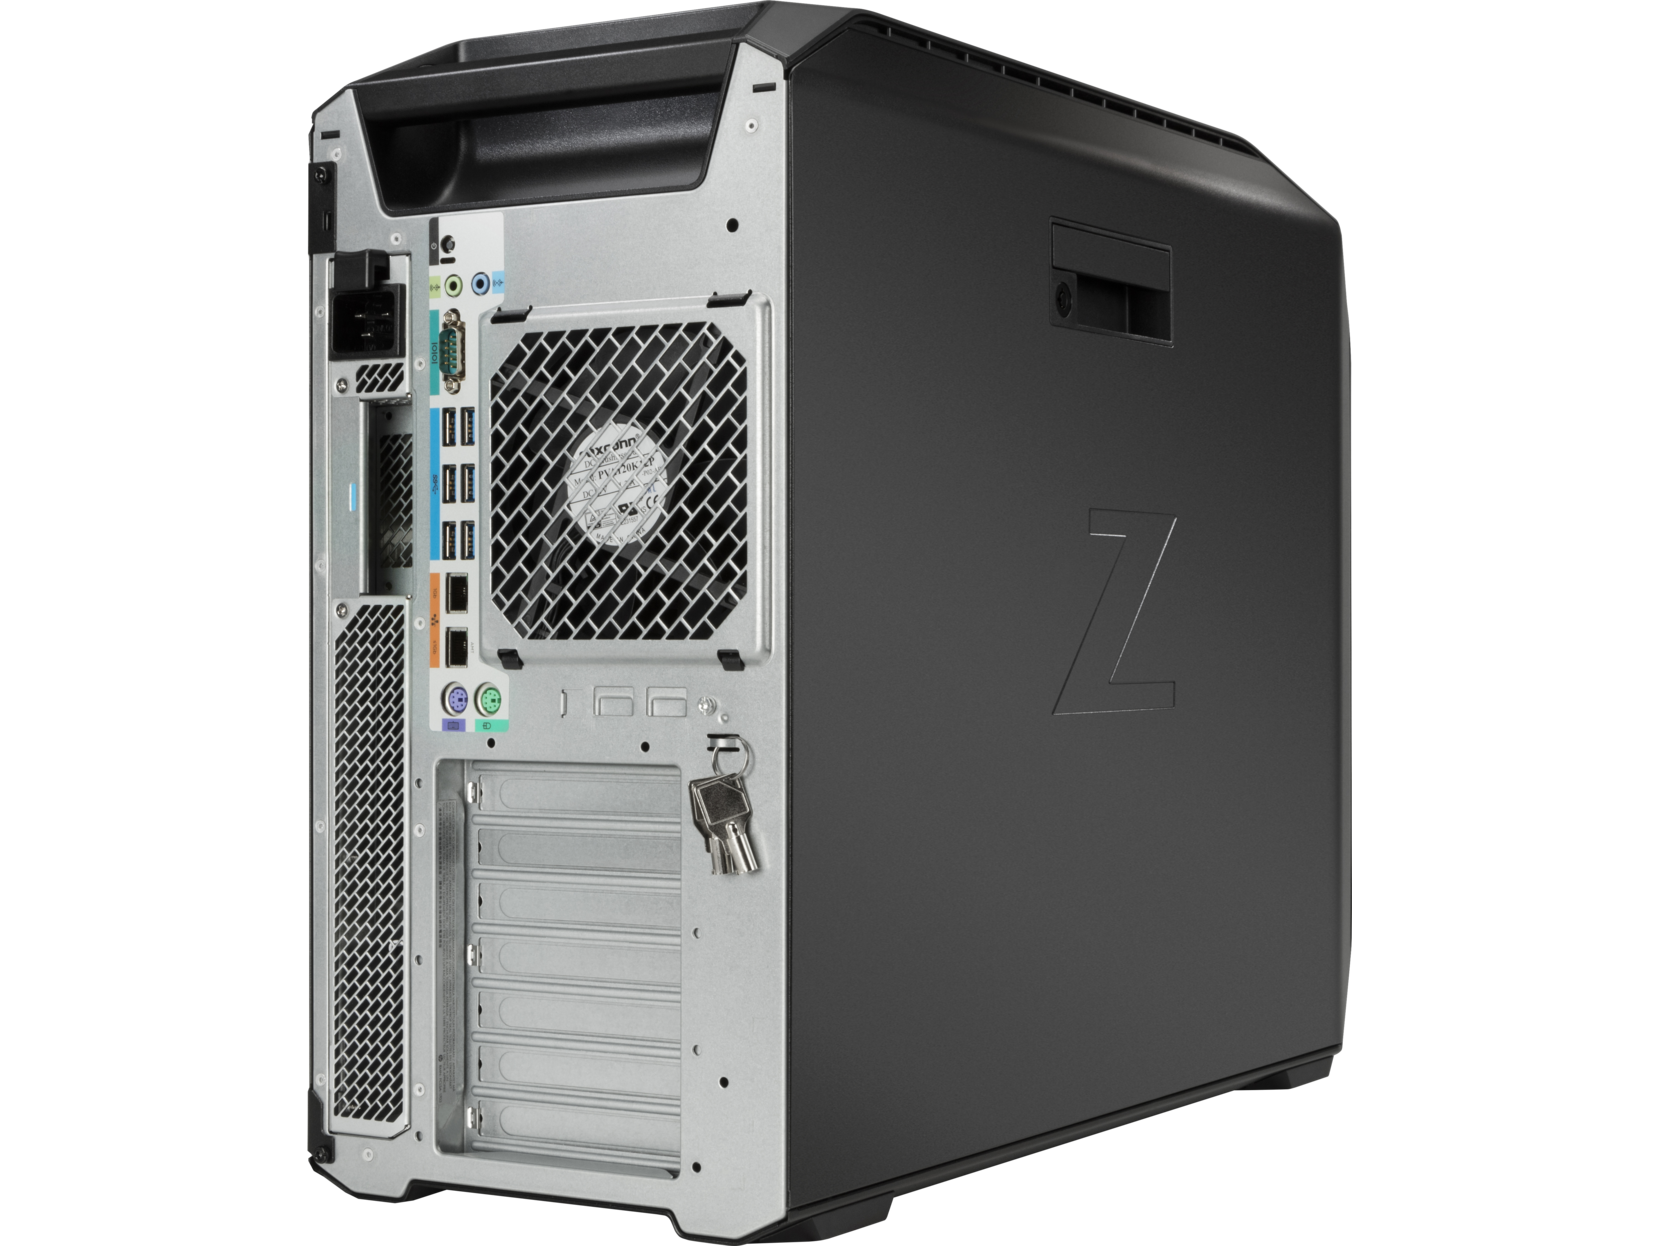 Рабочая станция HP Z8 G4, Xeon 4108, 32GB (4x8GB) DDR4-2666 ECC Reg, 1TB SATA, DVD-ODD, mouse, keyboard, Win10p64Workstationtier2-15501